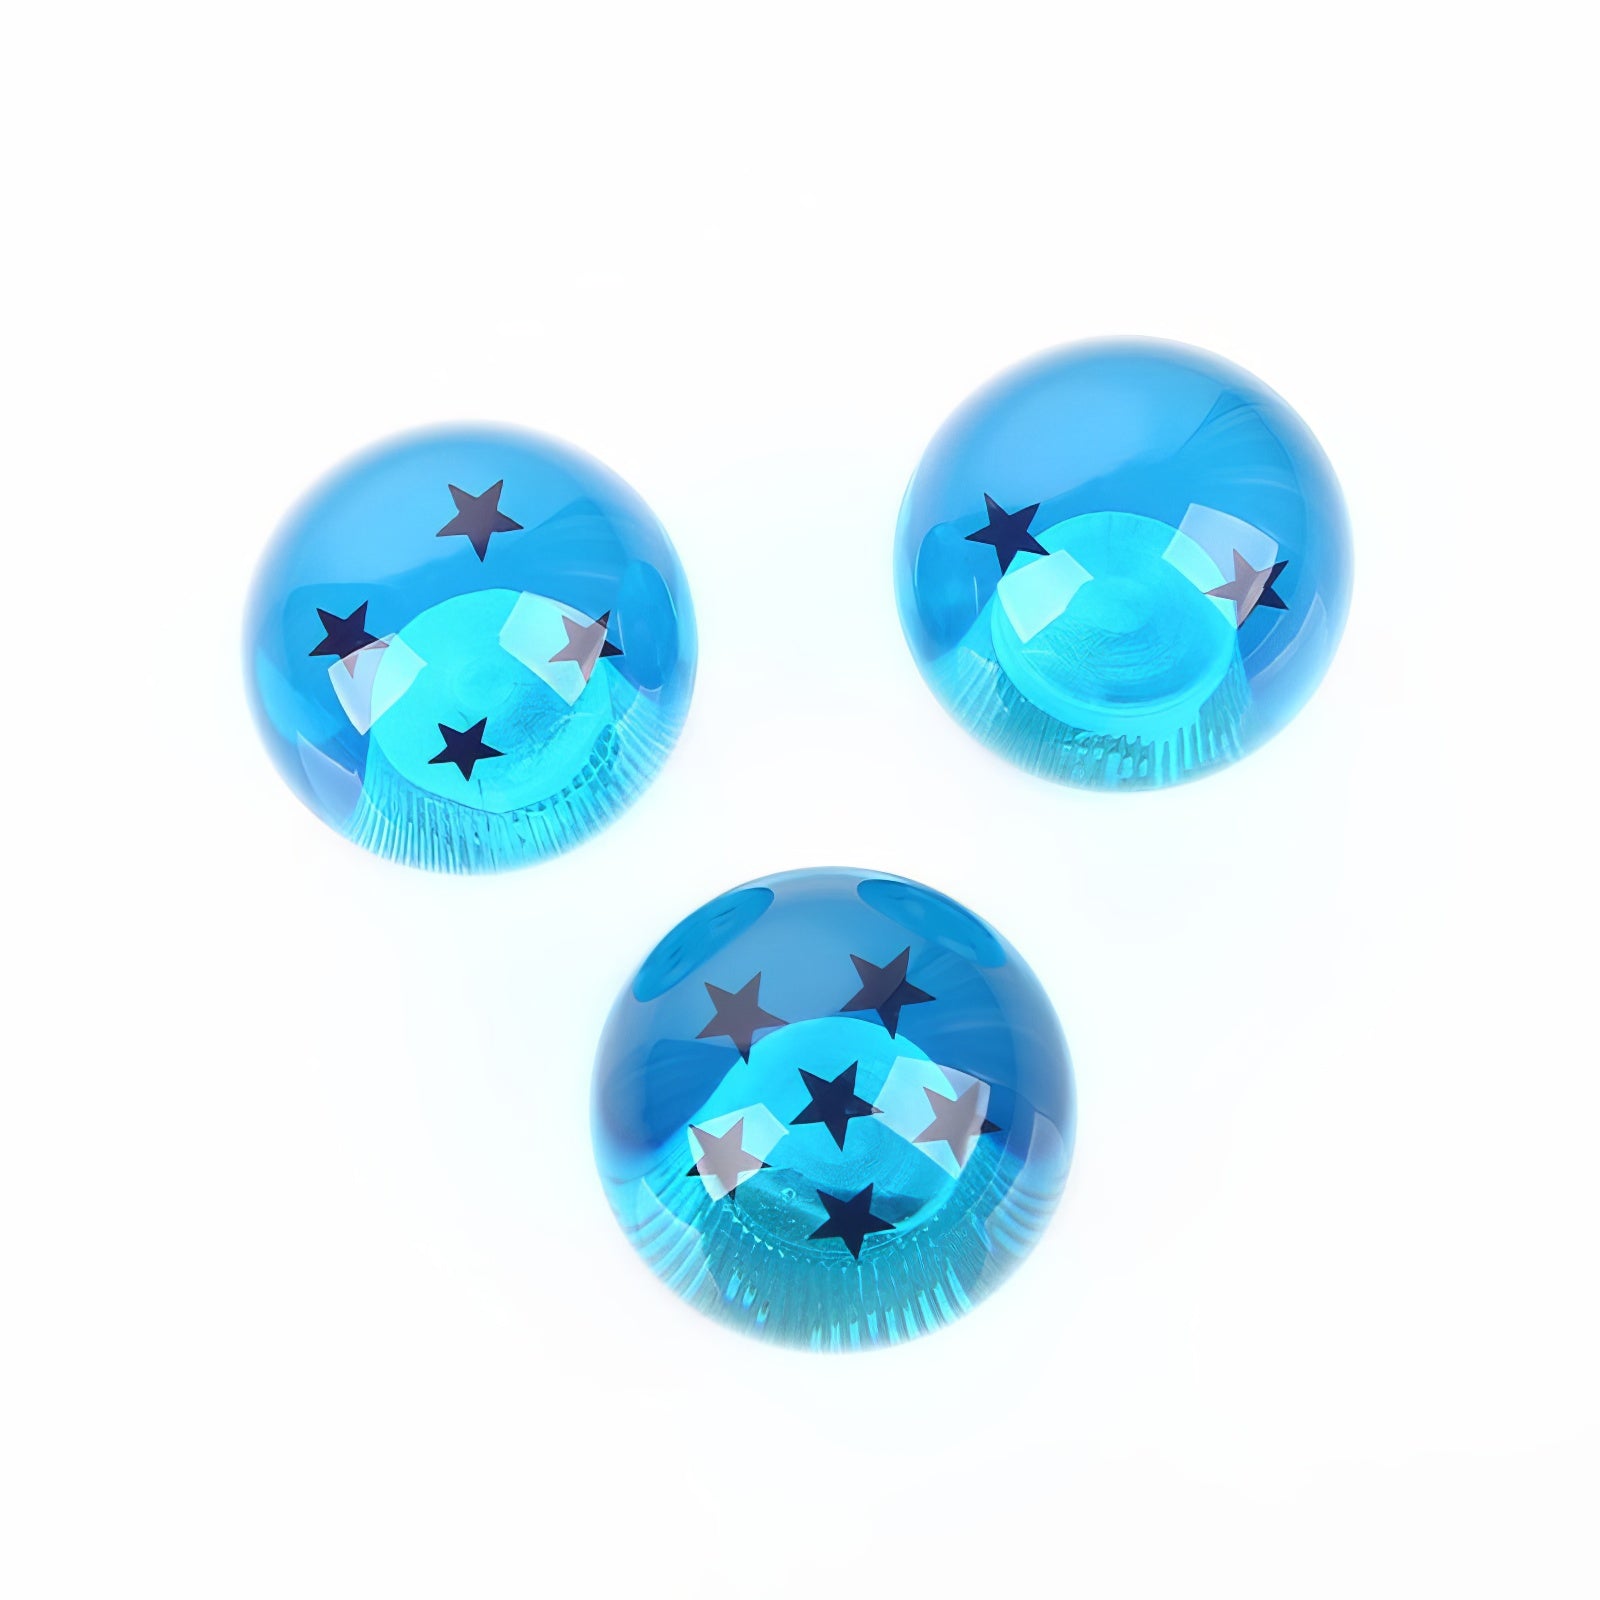 Rare blue dragon ball z gear shift knob with 4 stars, 2 stars, and 6 stars. 